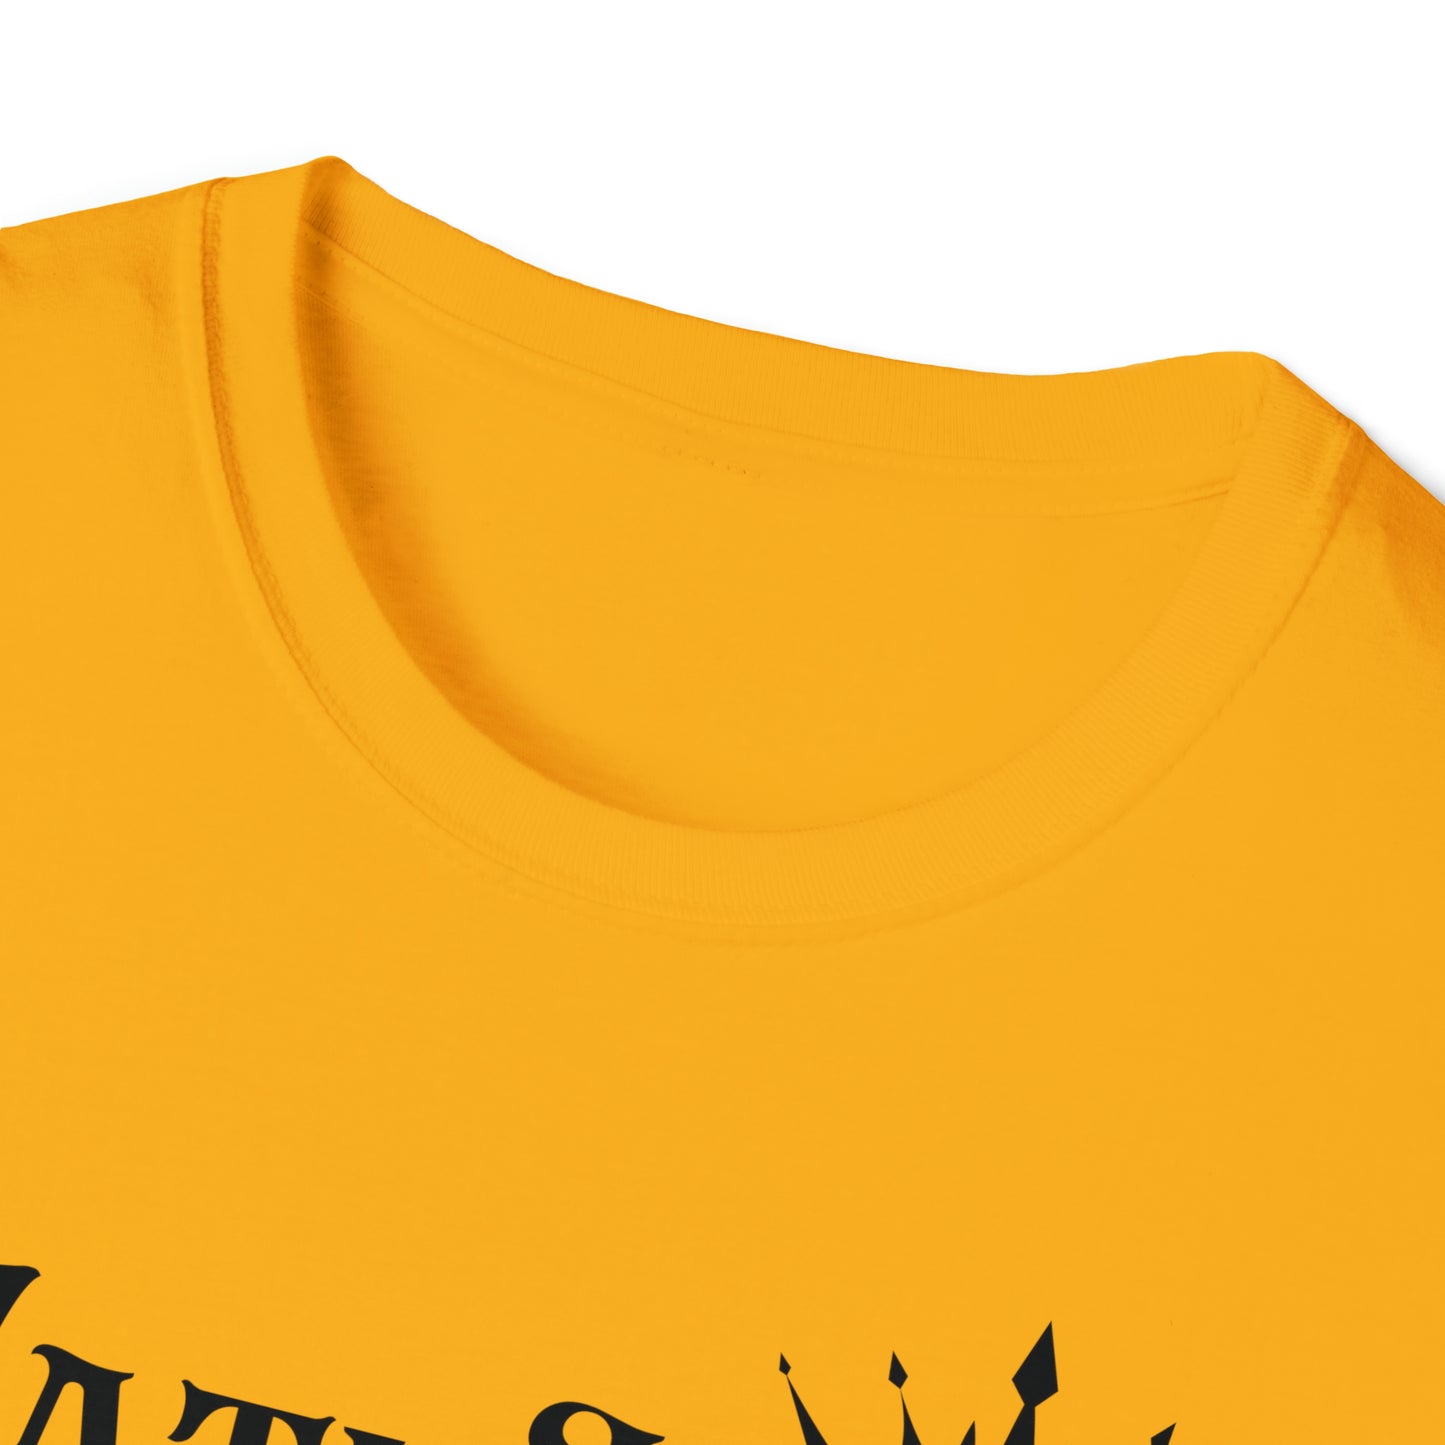 Math King Unisex Softstyle T-Shirt